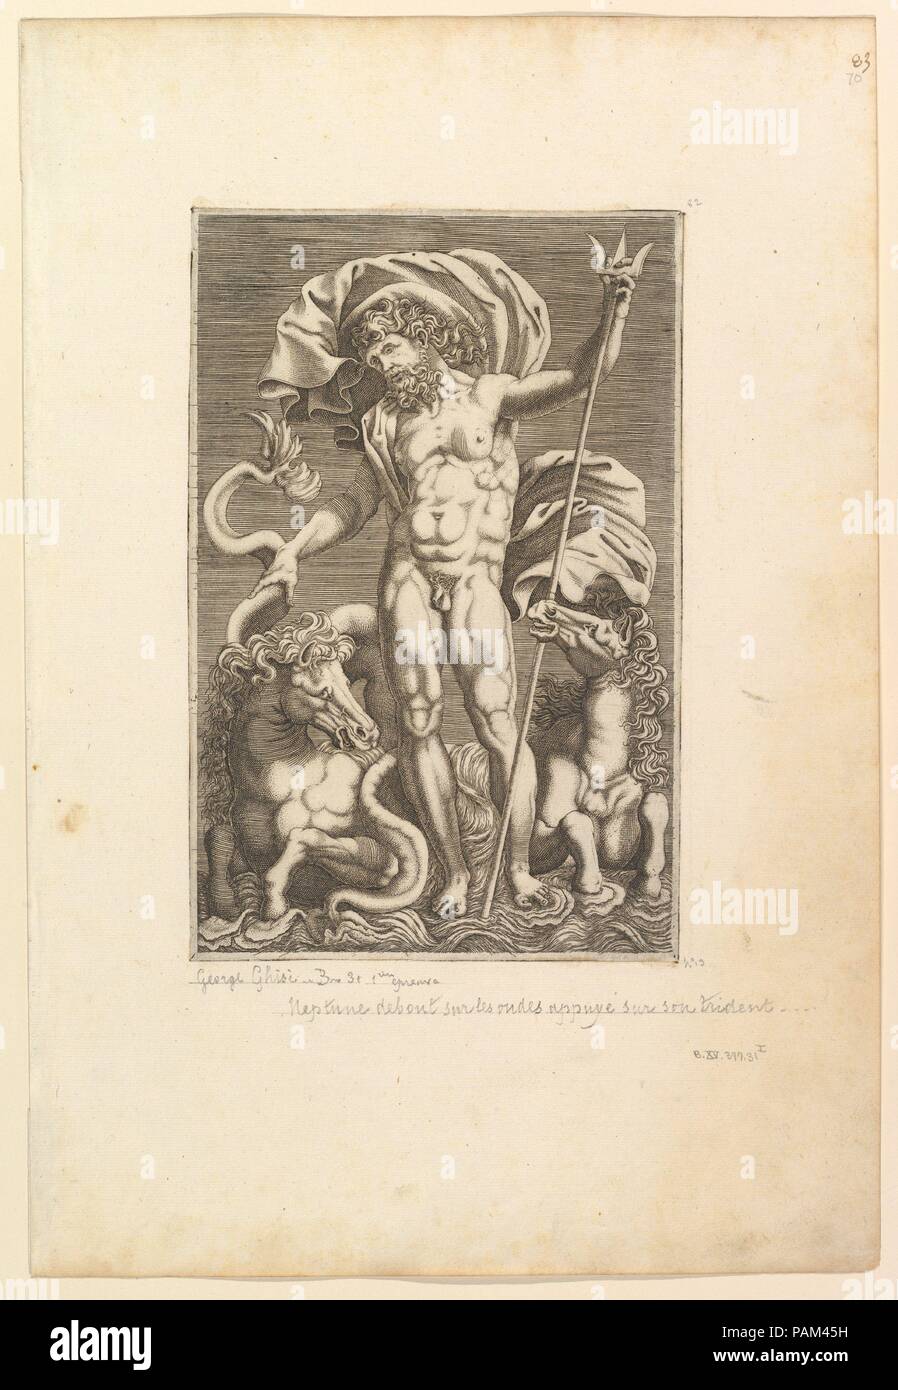 Neptune entre deux chevaux de mer. Artiste : Anonyme, Italien ?, 16e siècle ; après Perino del Vaga (Pietro Buonaccorsi (Italien), Florence Rome 1501-1547). Dimensions : plateau : 9 1/4 x 6 9/16 in. (24,3 x 15,9 cm) Fiche technique : platemark 16 1/16 x 10 7/8 in. (40,8 x 27,6 cm). Ancienne Attribution : Giorgio Ghisi (Italien, Mantoue ca. Mantoue 1520-1582). Date : ca. 1560-80. Musée : Metropolitan Museum of Art, New York, USA. Banque D'Images